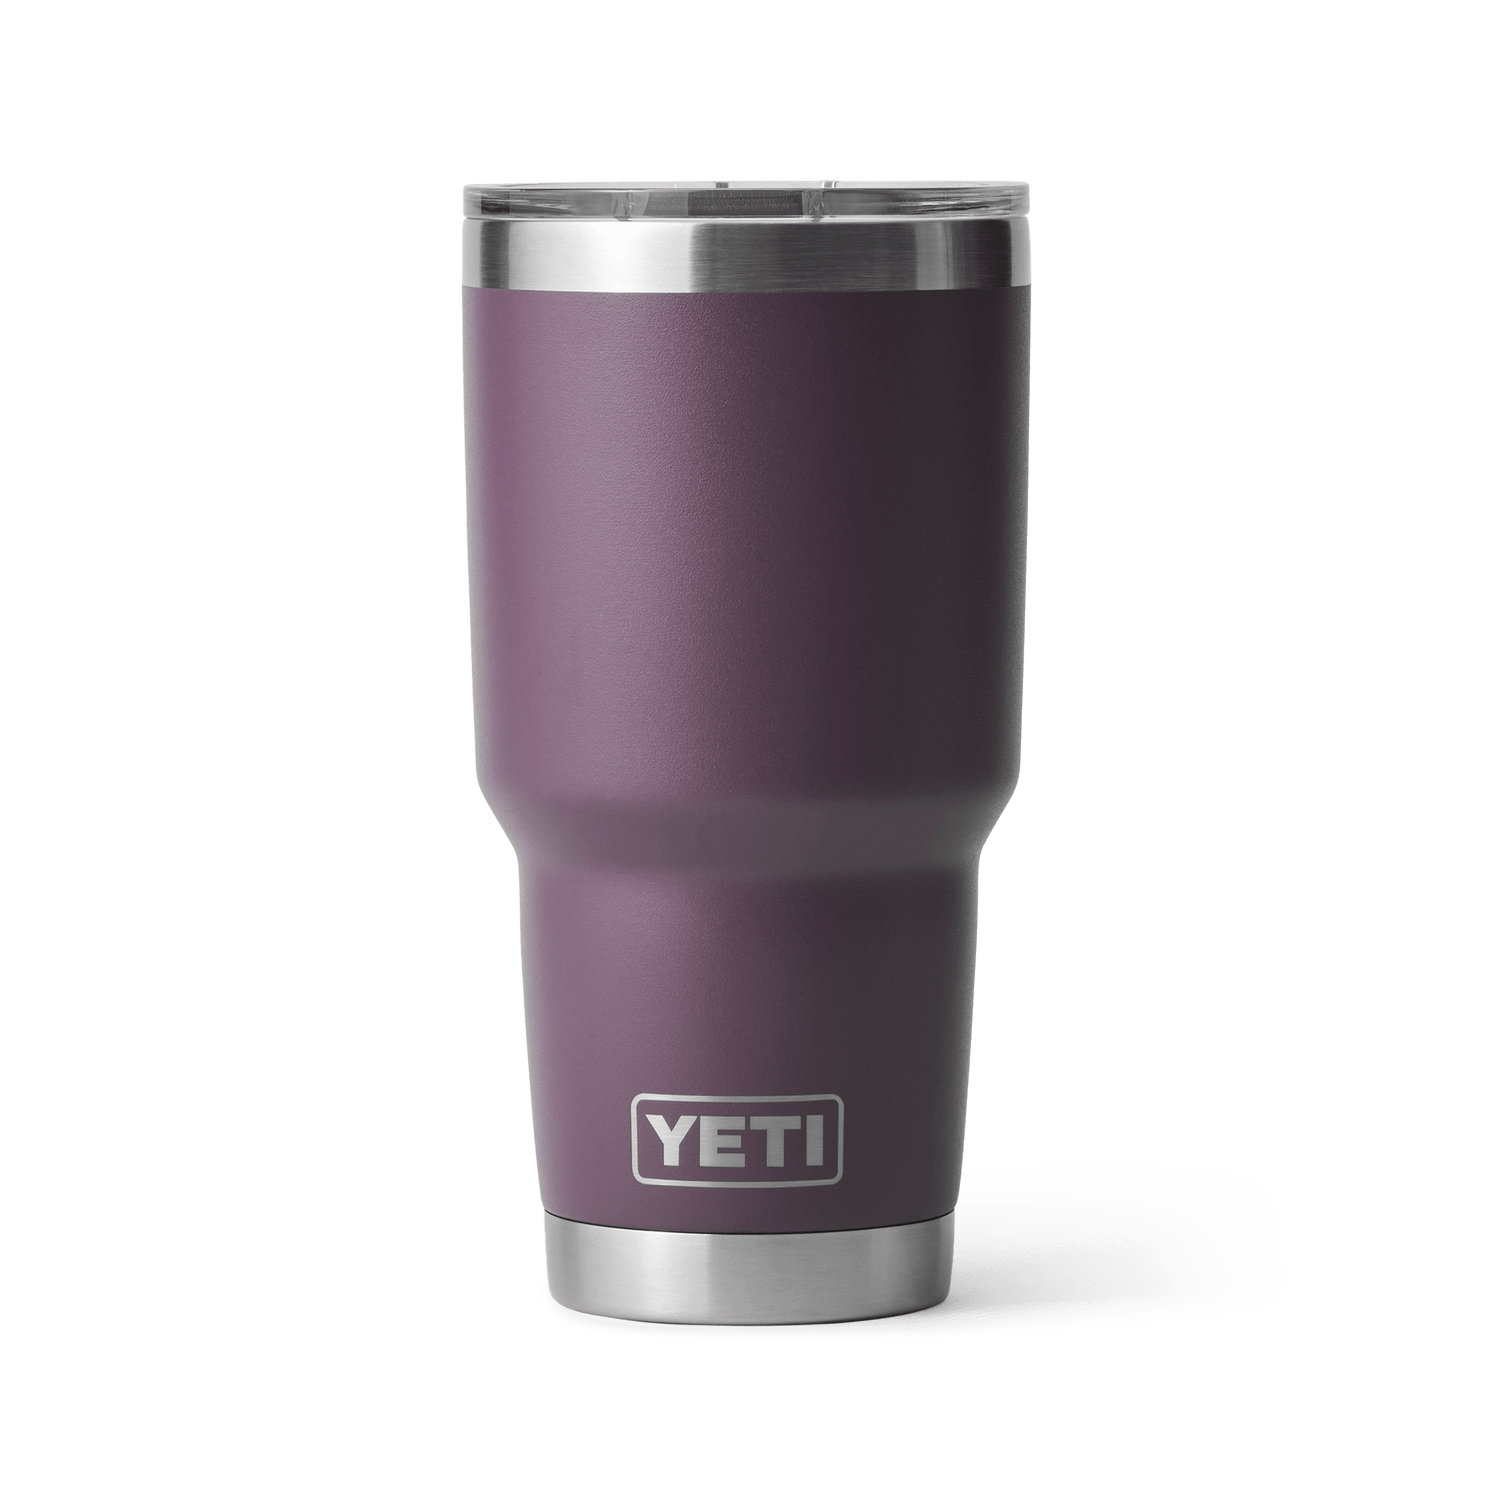 xobc - Products - Nordic Purple Yeti 2 Pack